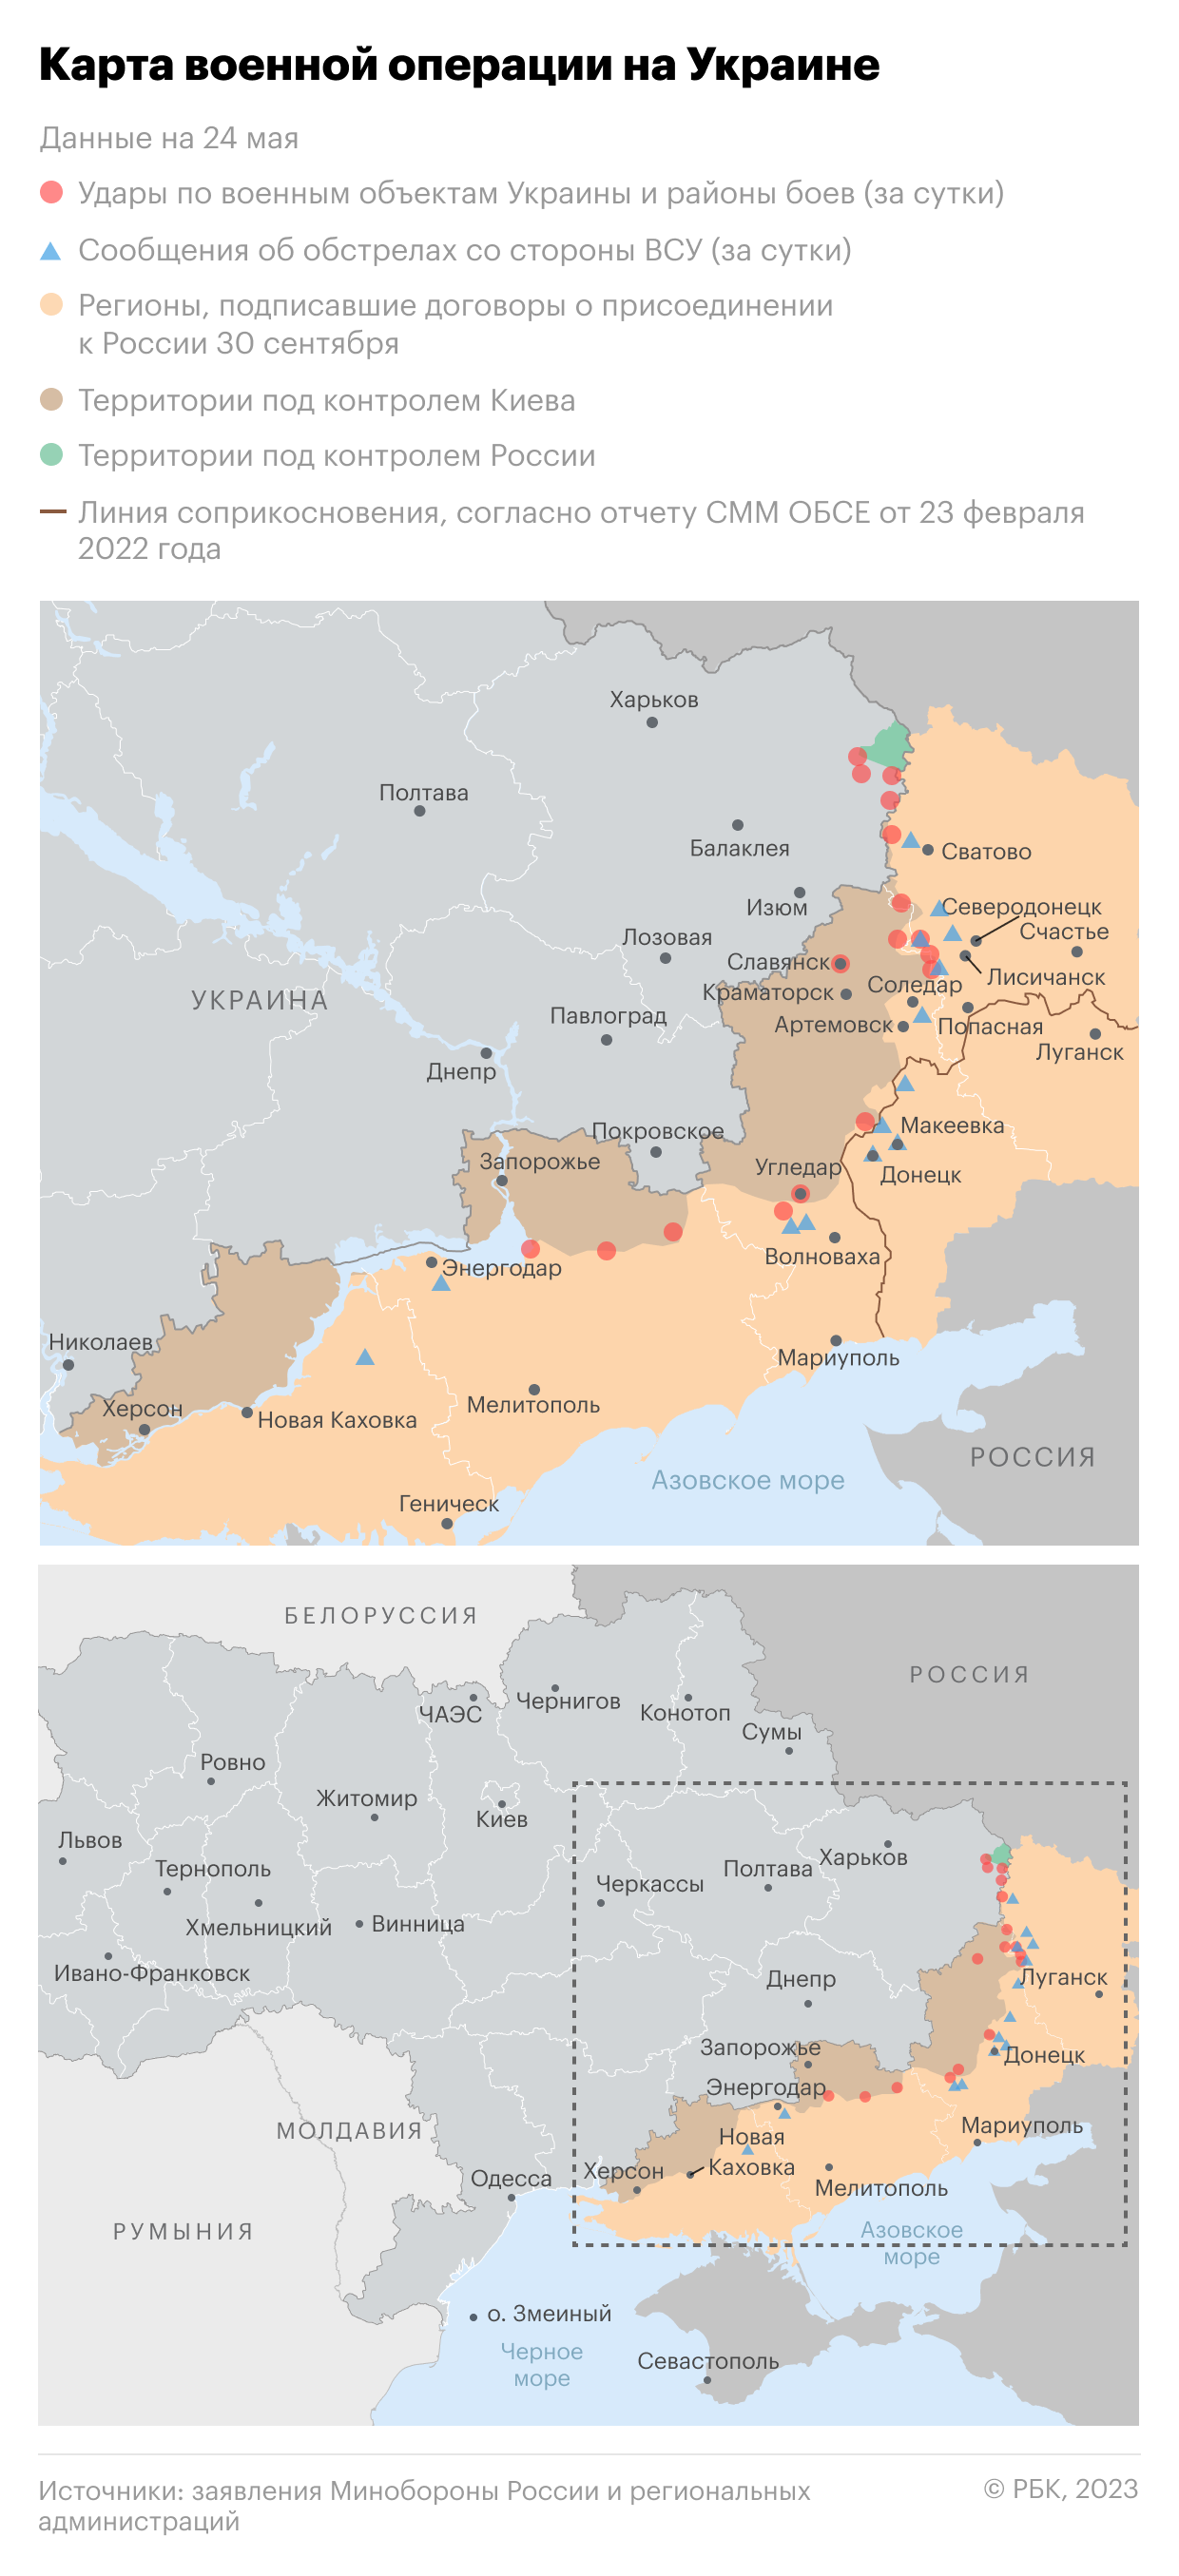 Военная операция на Украине. Карта на 24 мая